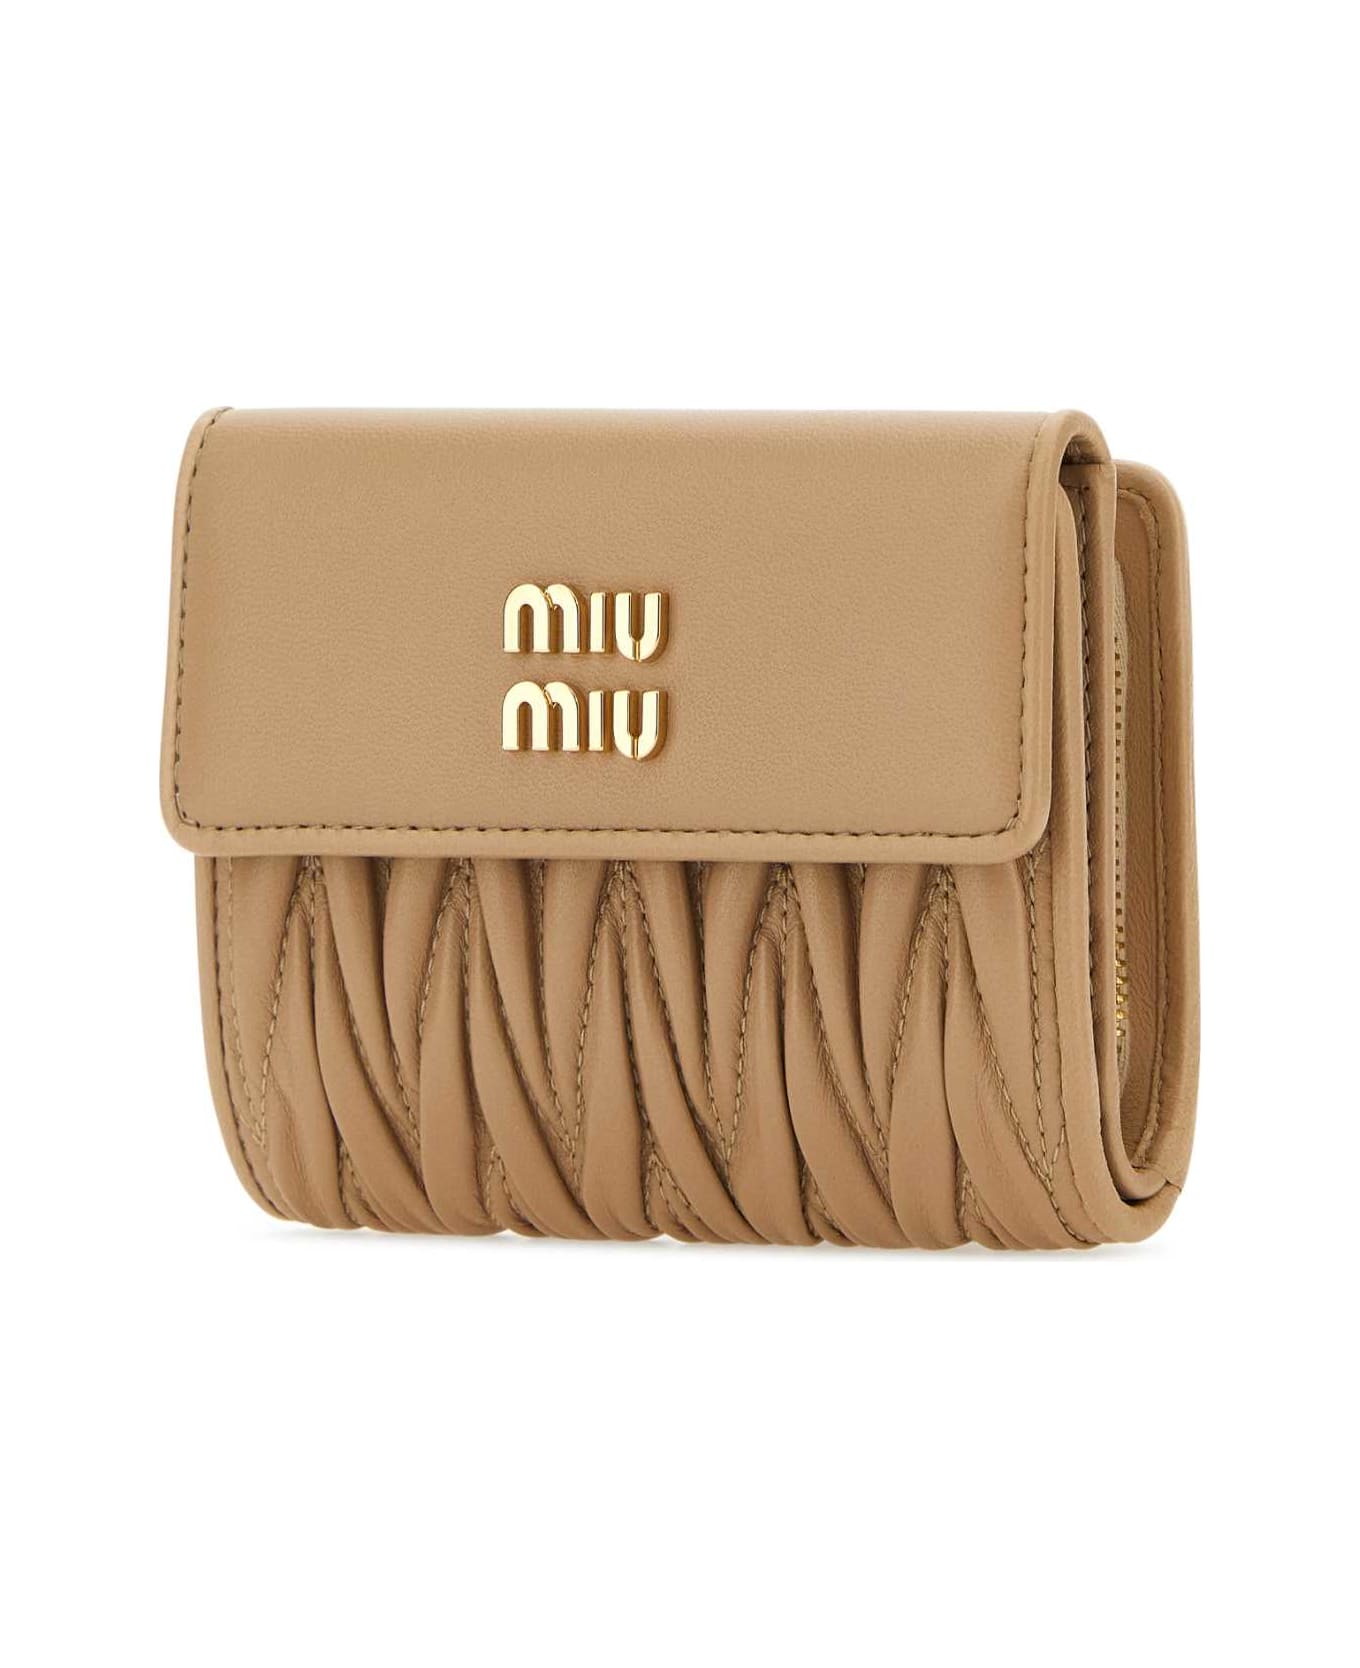 Miu Miu Sand Leather Wallet - SABBIA 財布